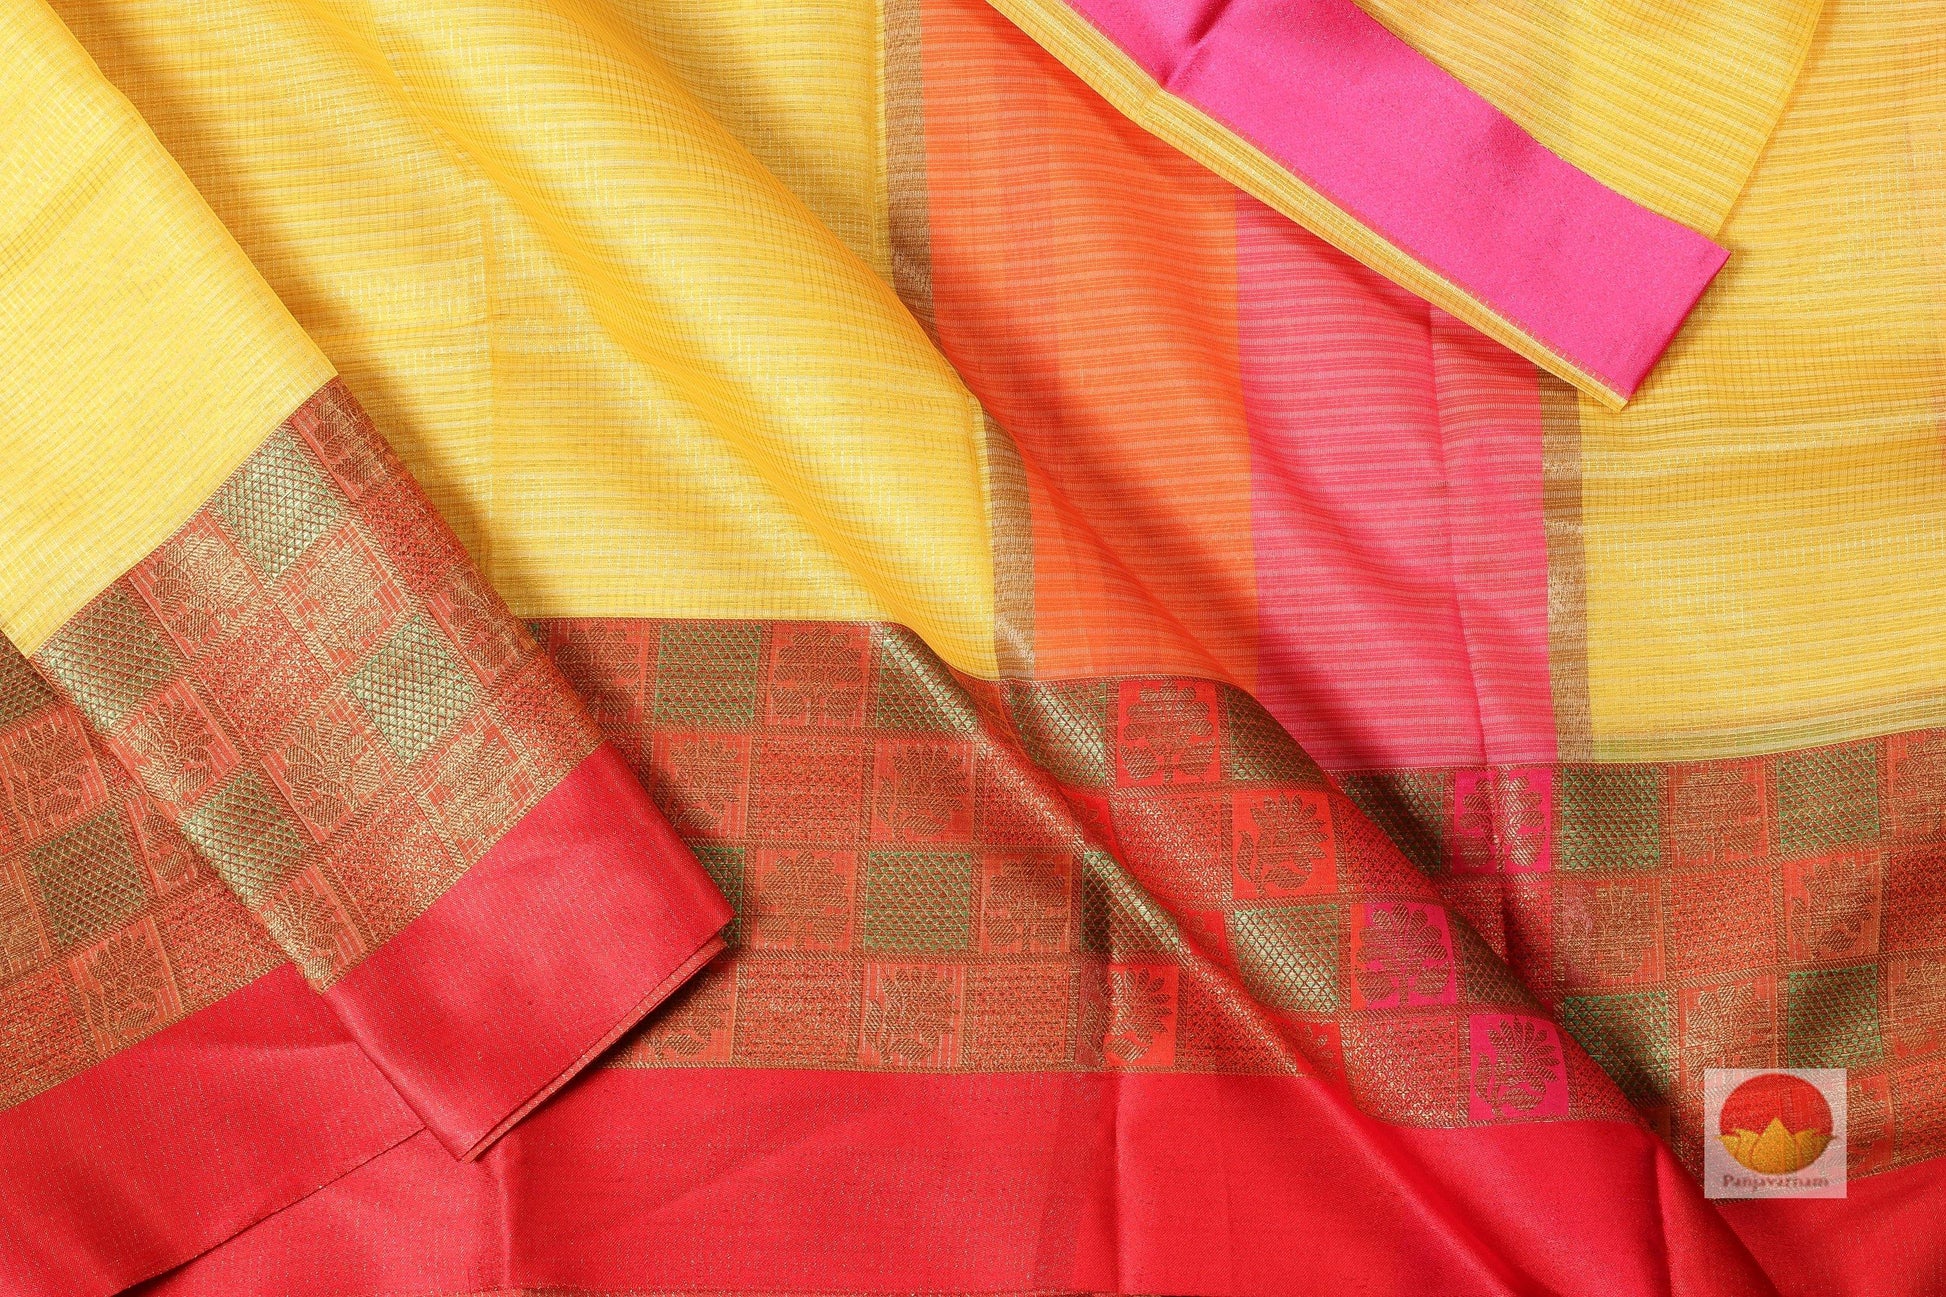 body, border and pallu detail in banarasi silk cotton saree